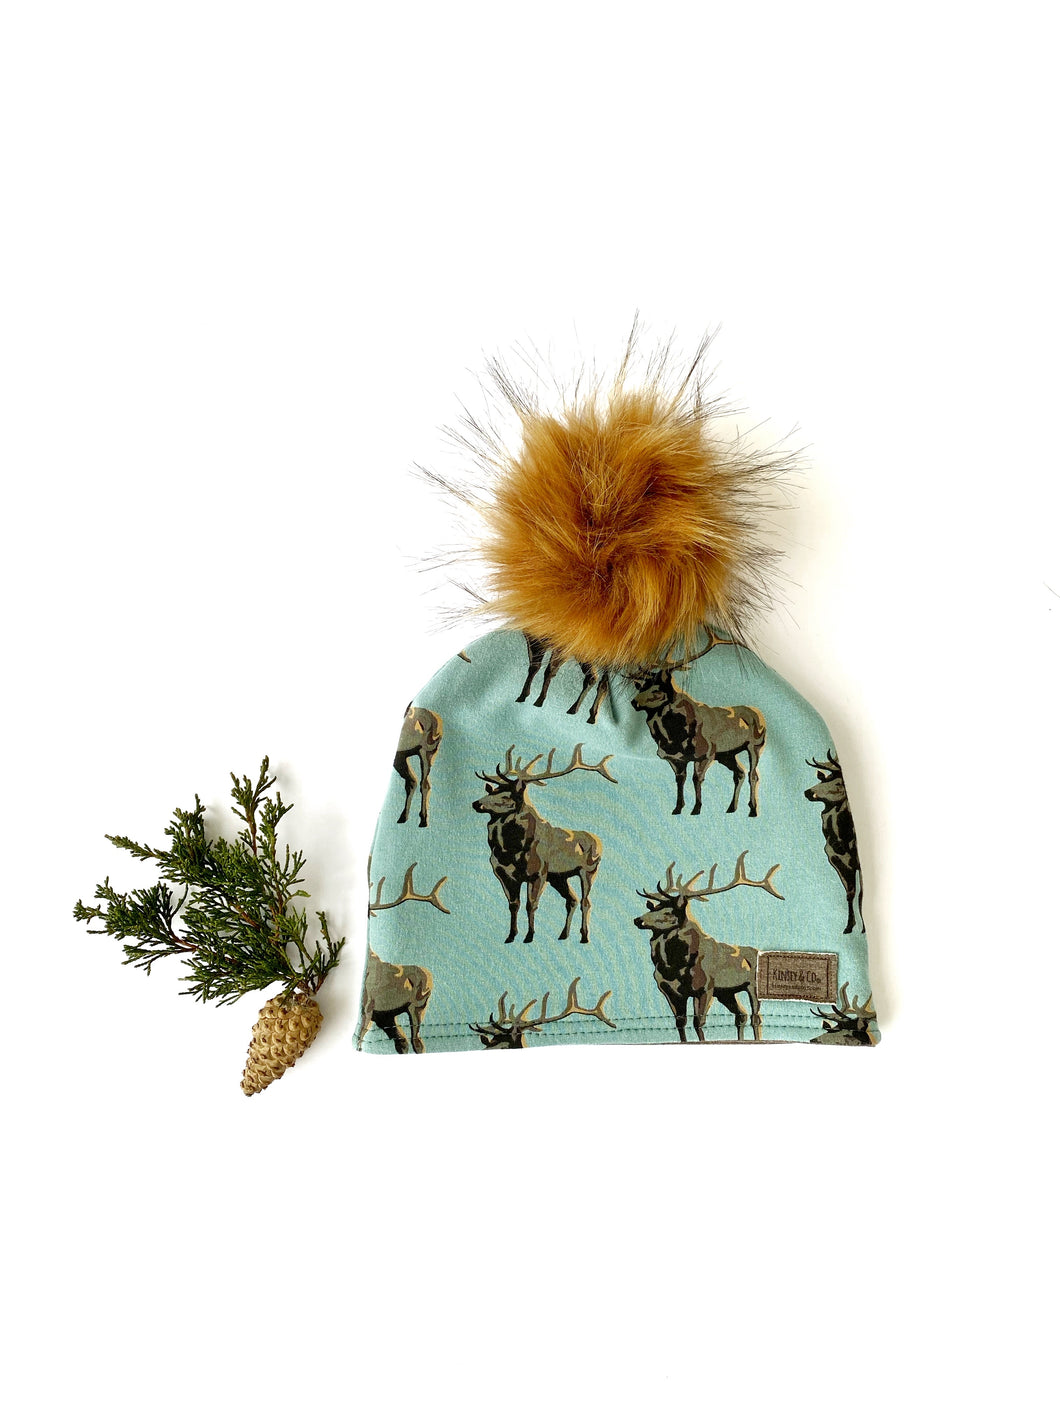 Deer Winter Hat Beanie Baby, Toddler, Child, Adult Medium, Adult Large